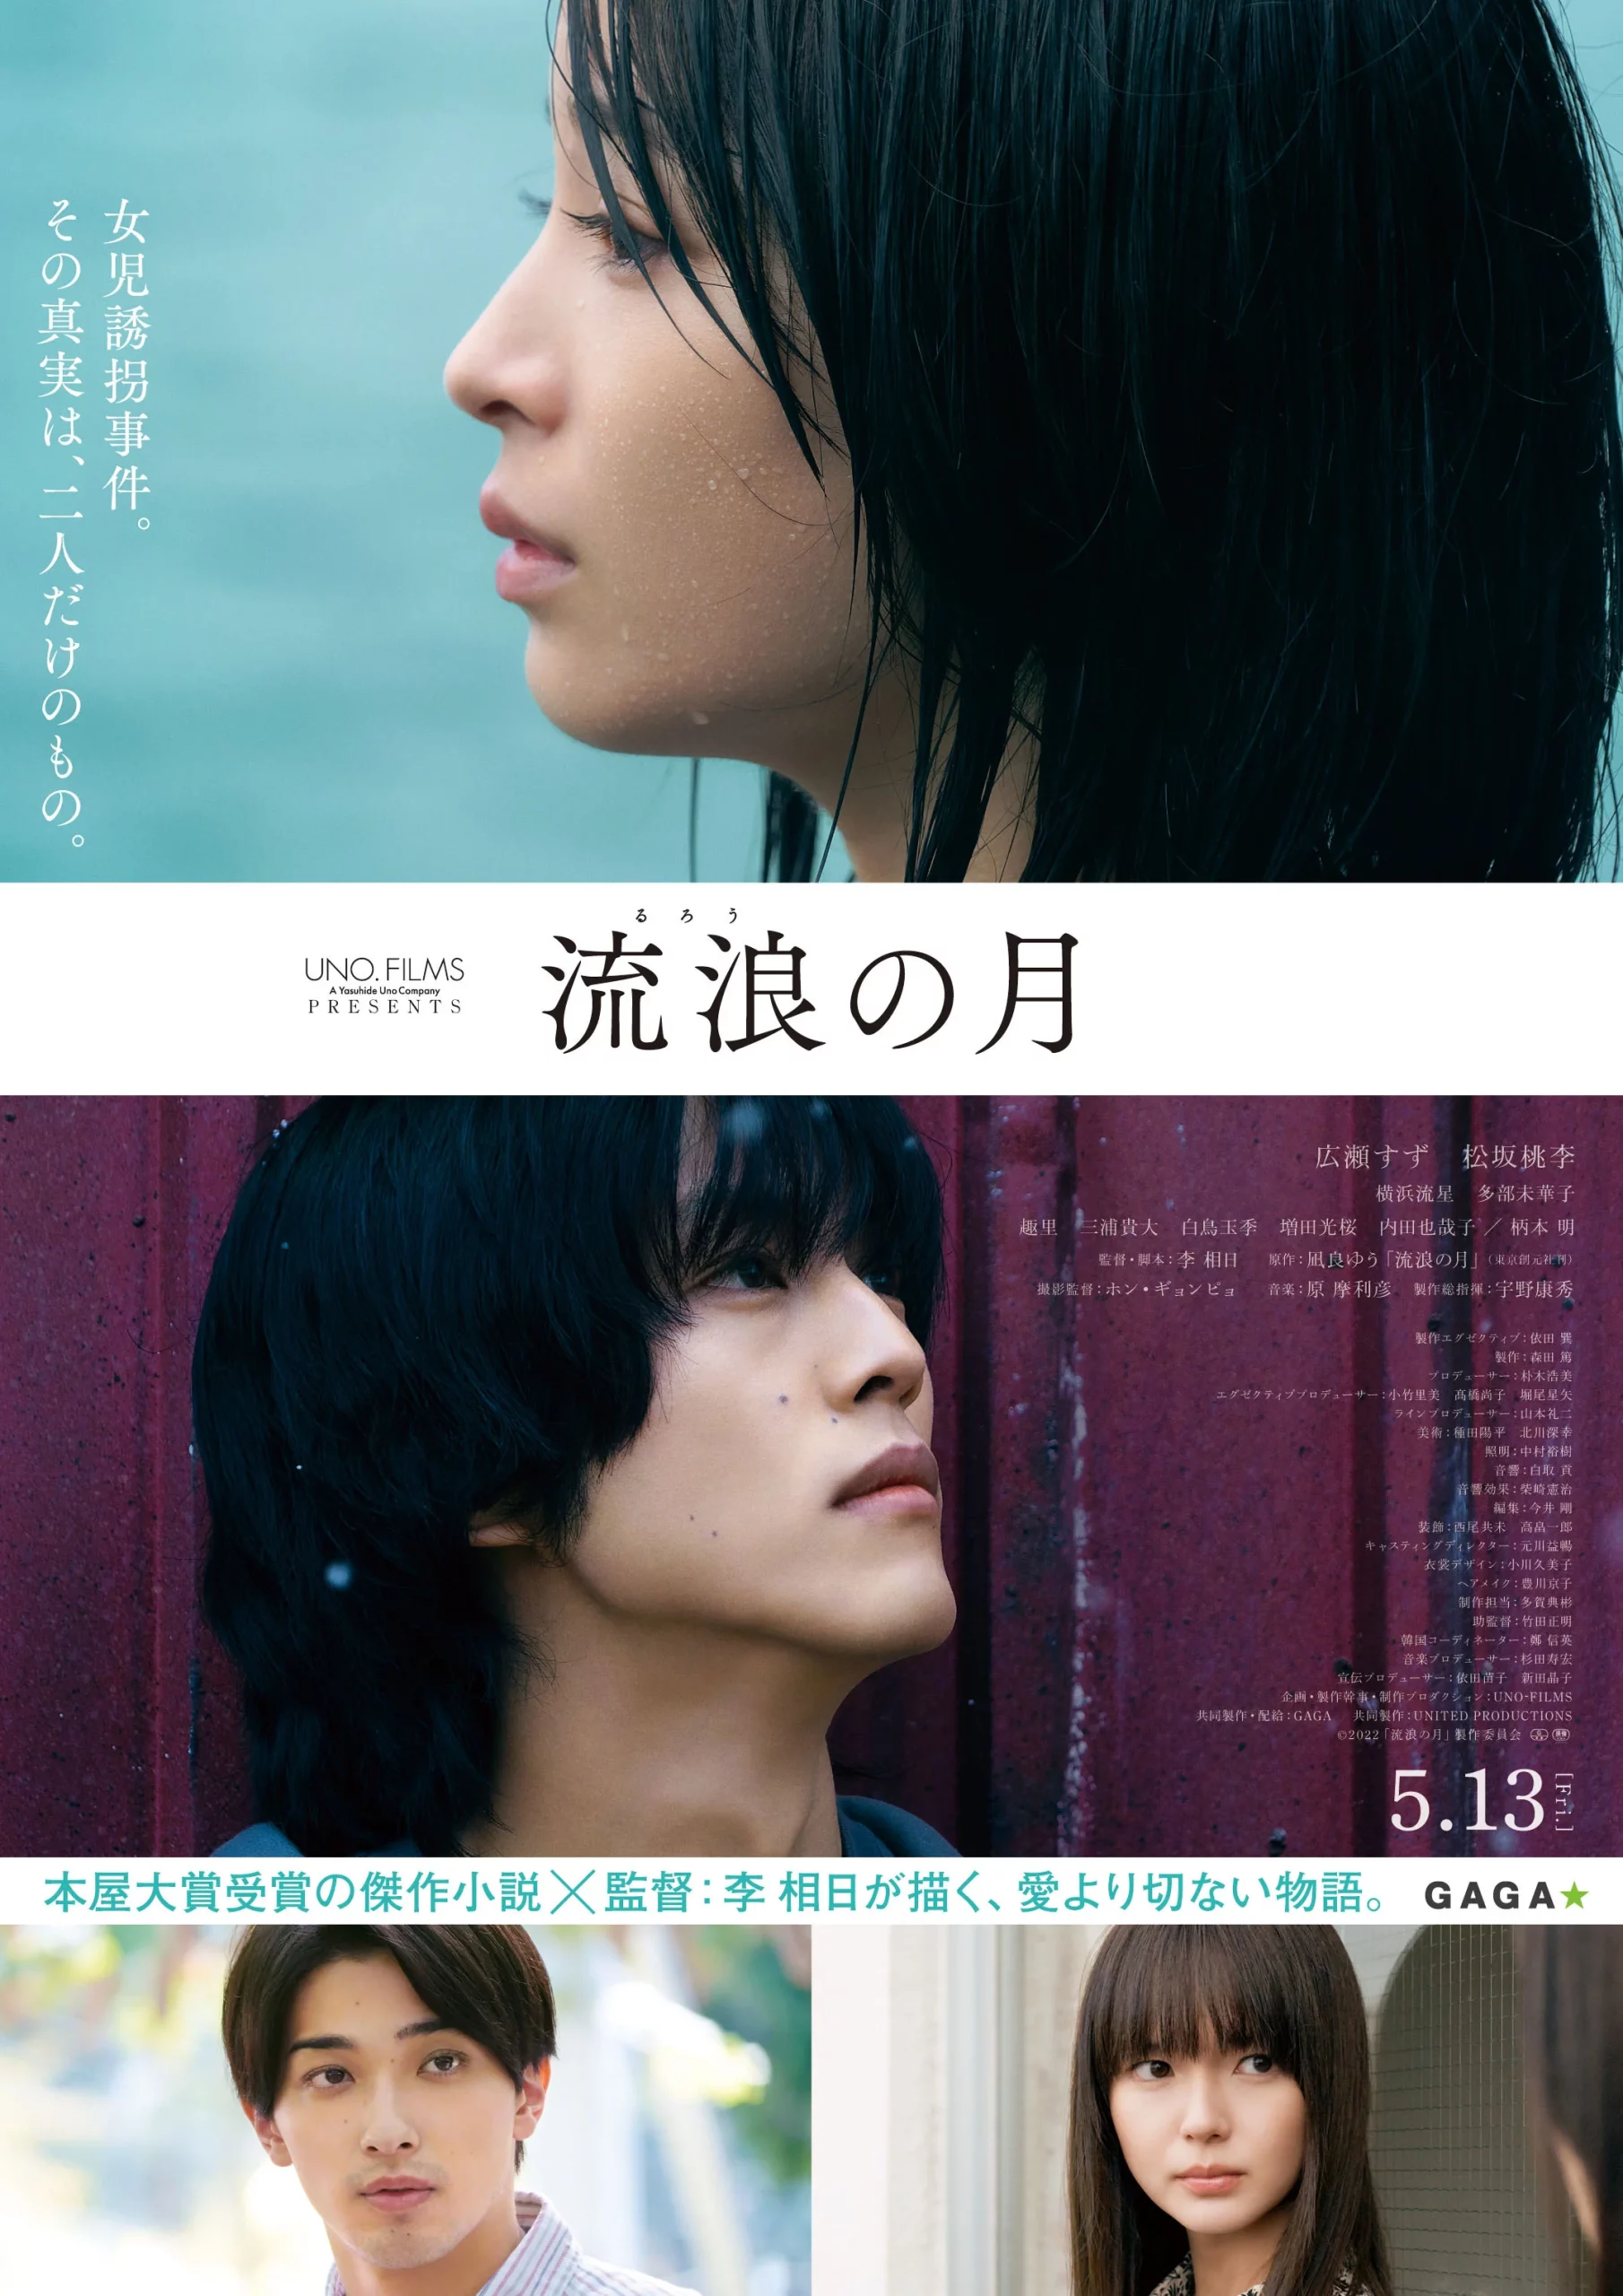 New trailer for "The Wandering Moon" starring Suzu Hirose & Tôri Matsuzaka